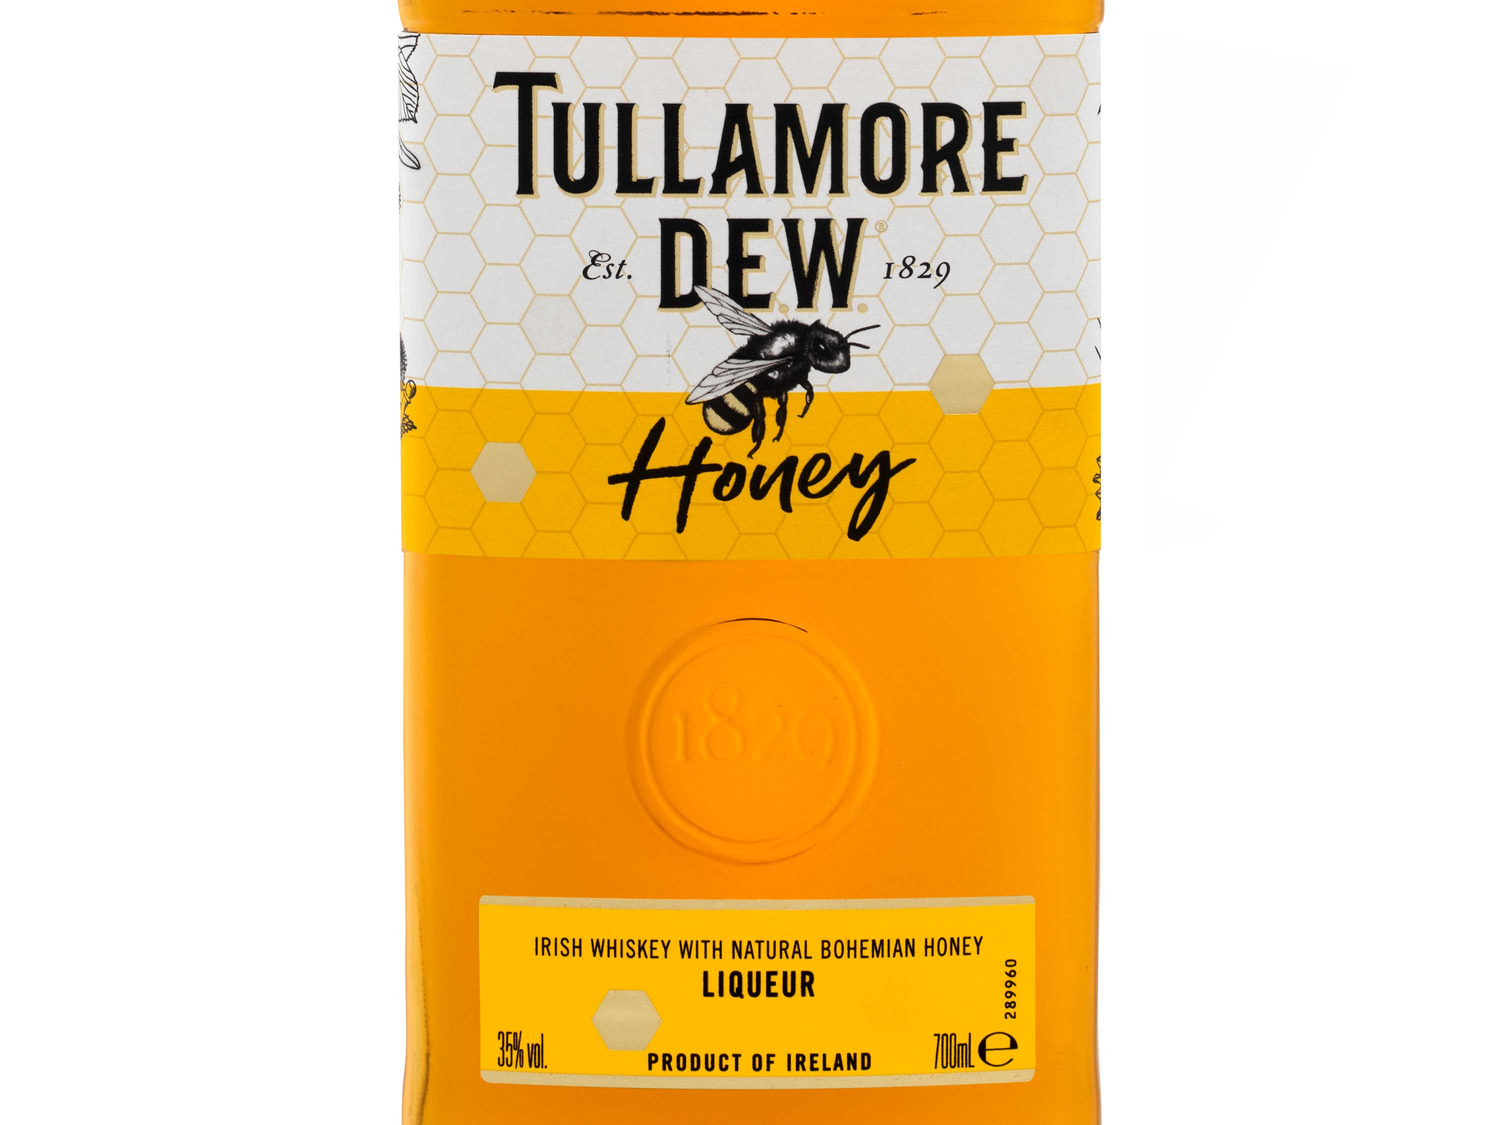 LIDL 35% Liquer Dew Whiskey Tullamore | Vol Honey